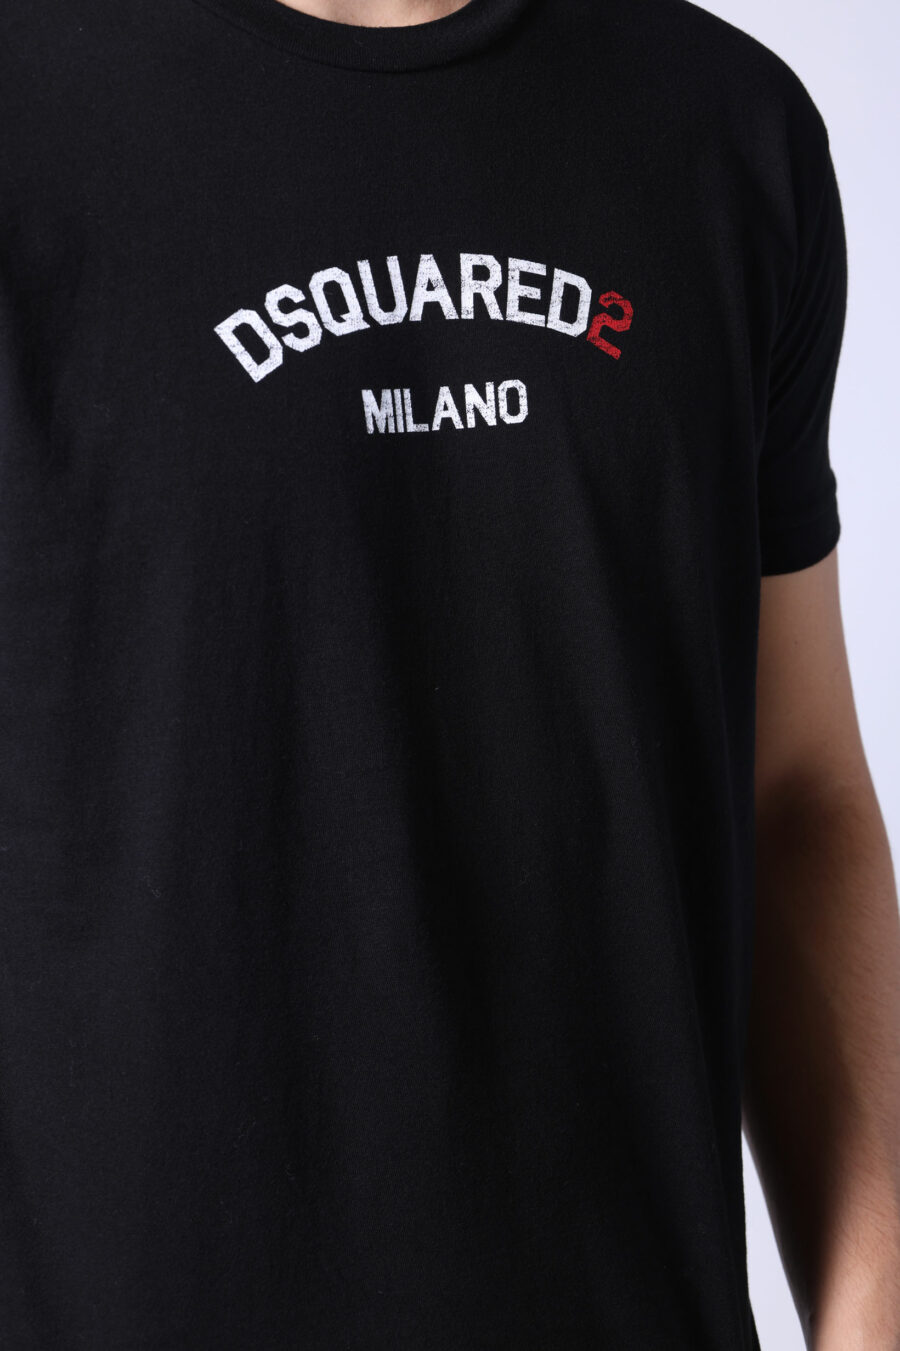 Schwarzes T-Shirt mit Minilogue "dsquared2 milano" - Untitled Catalog 05473